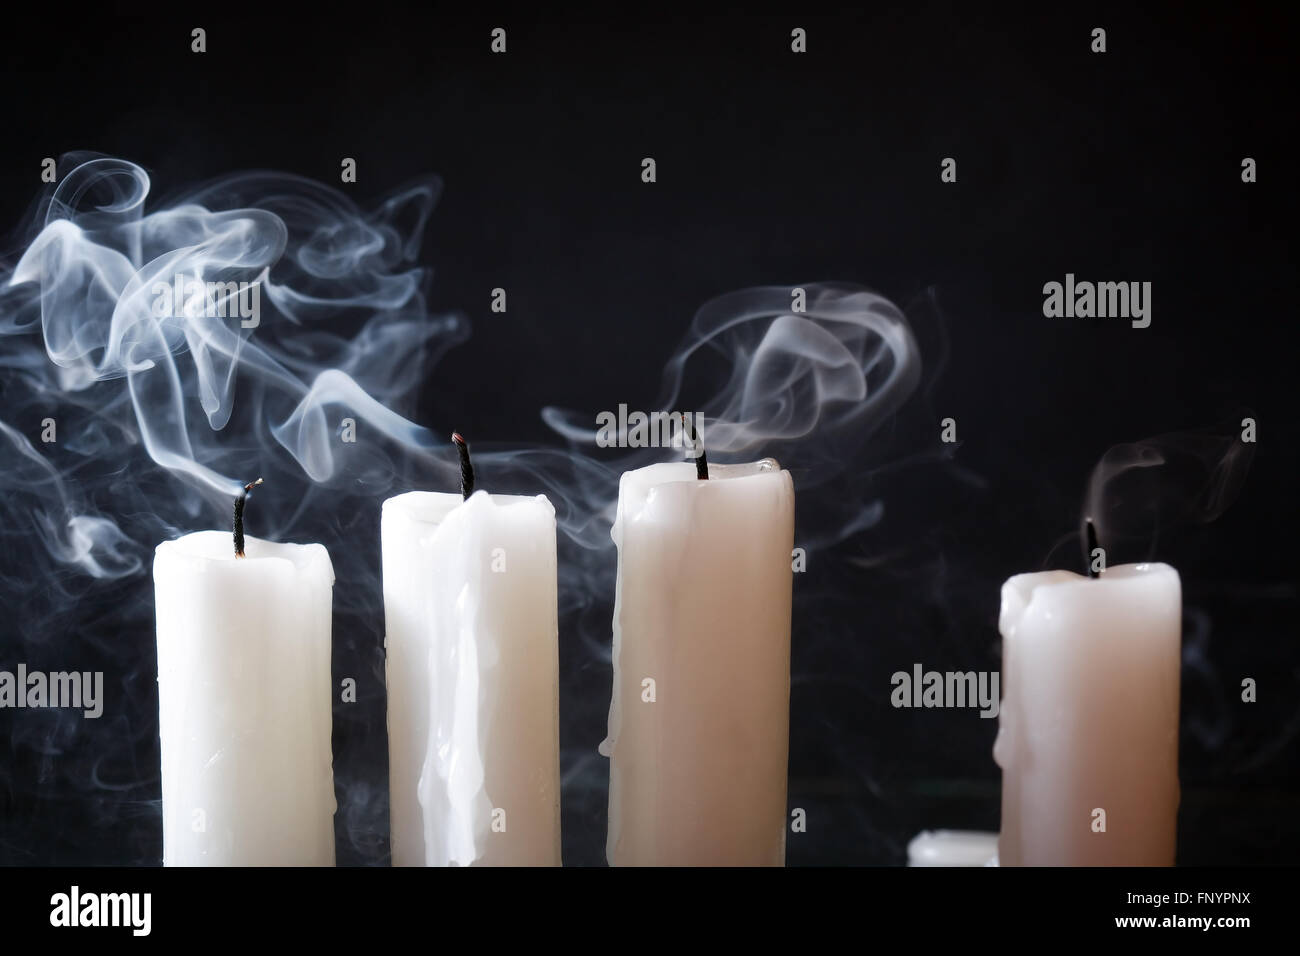 https://c8.alamy.com/comp/FNYPNX/few-extinguished-candles-in-a-row-on-dark-background-FNYPNX.jpg